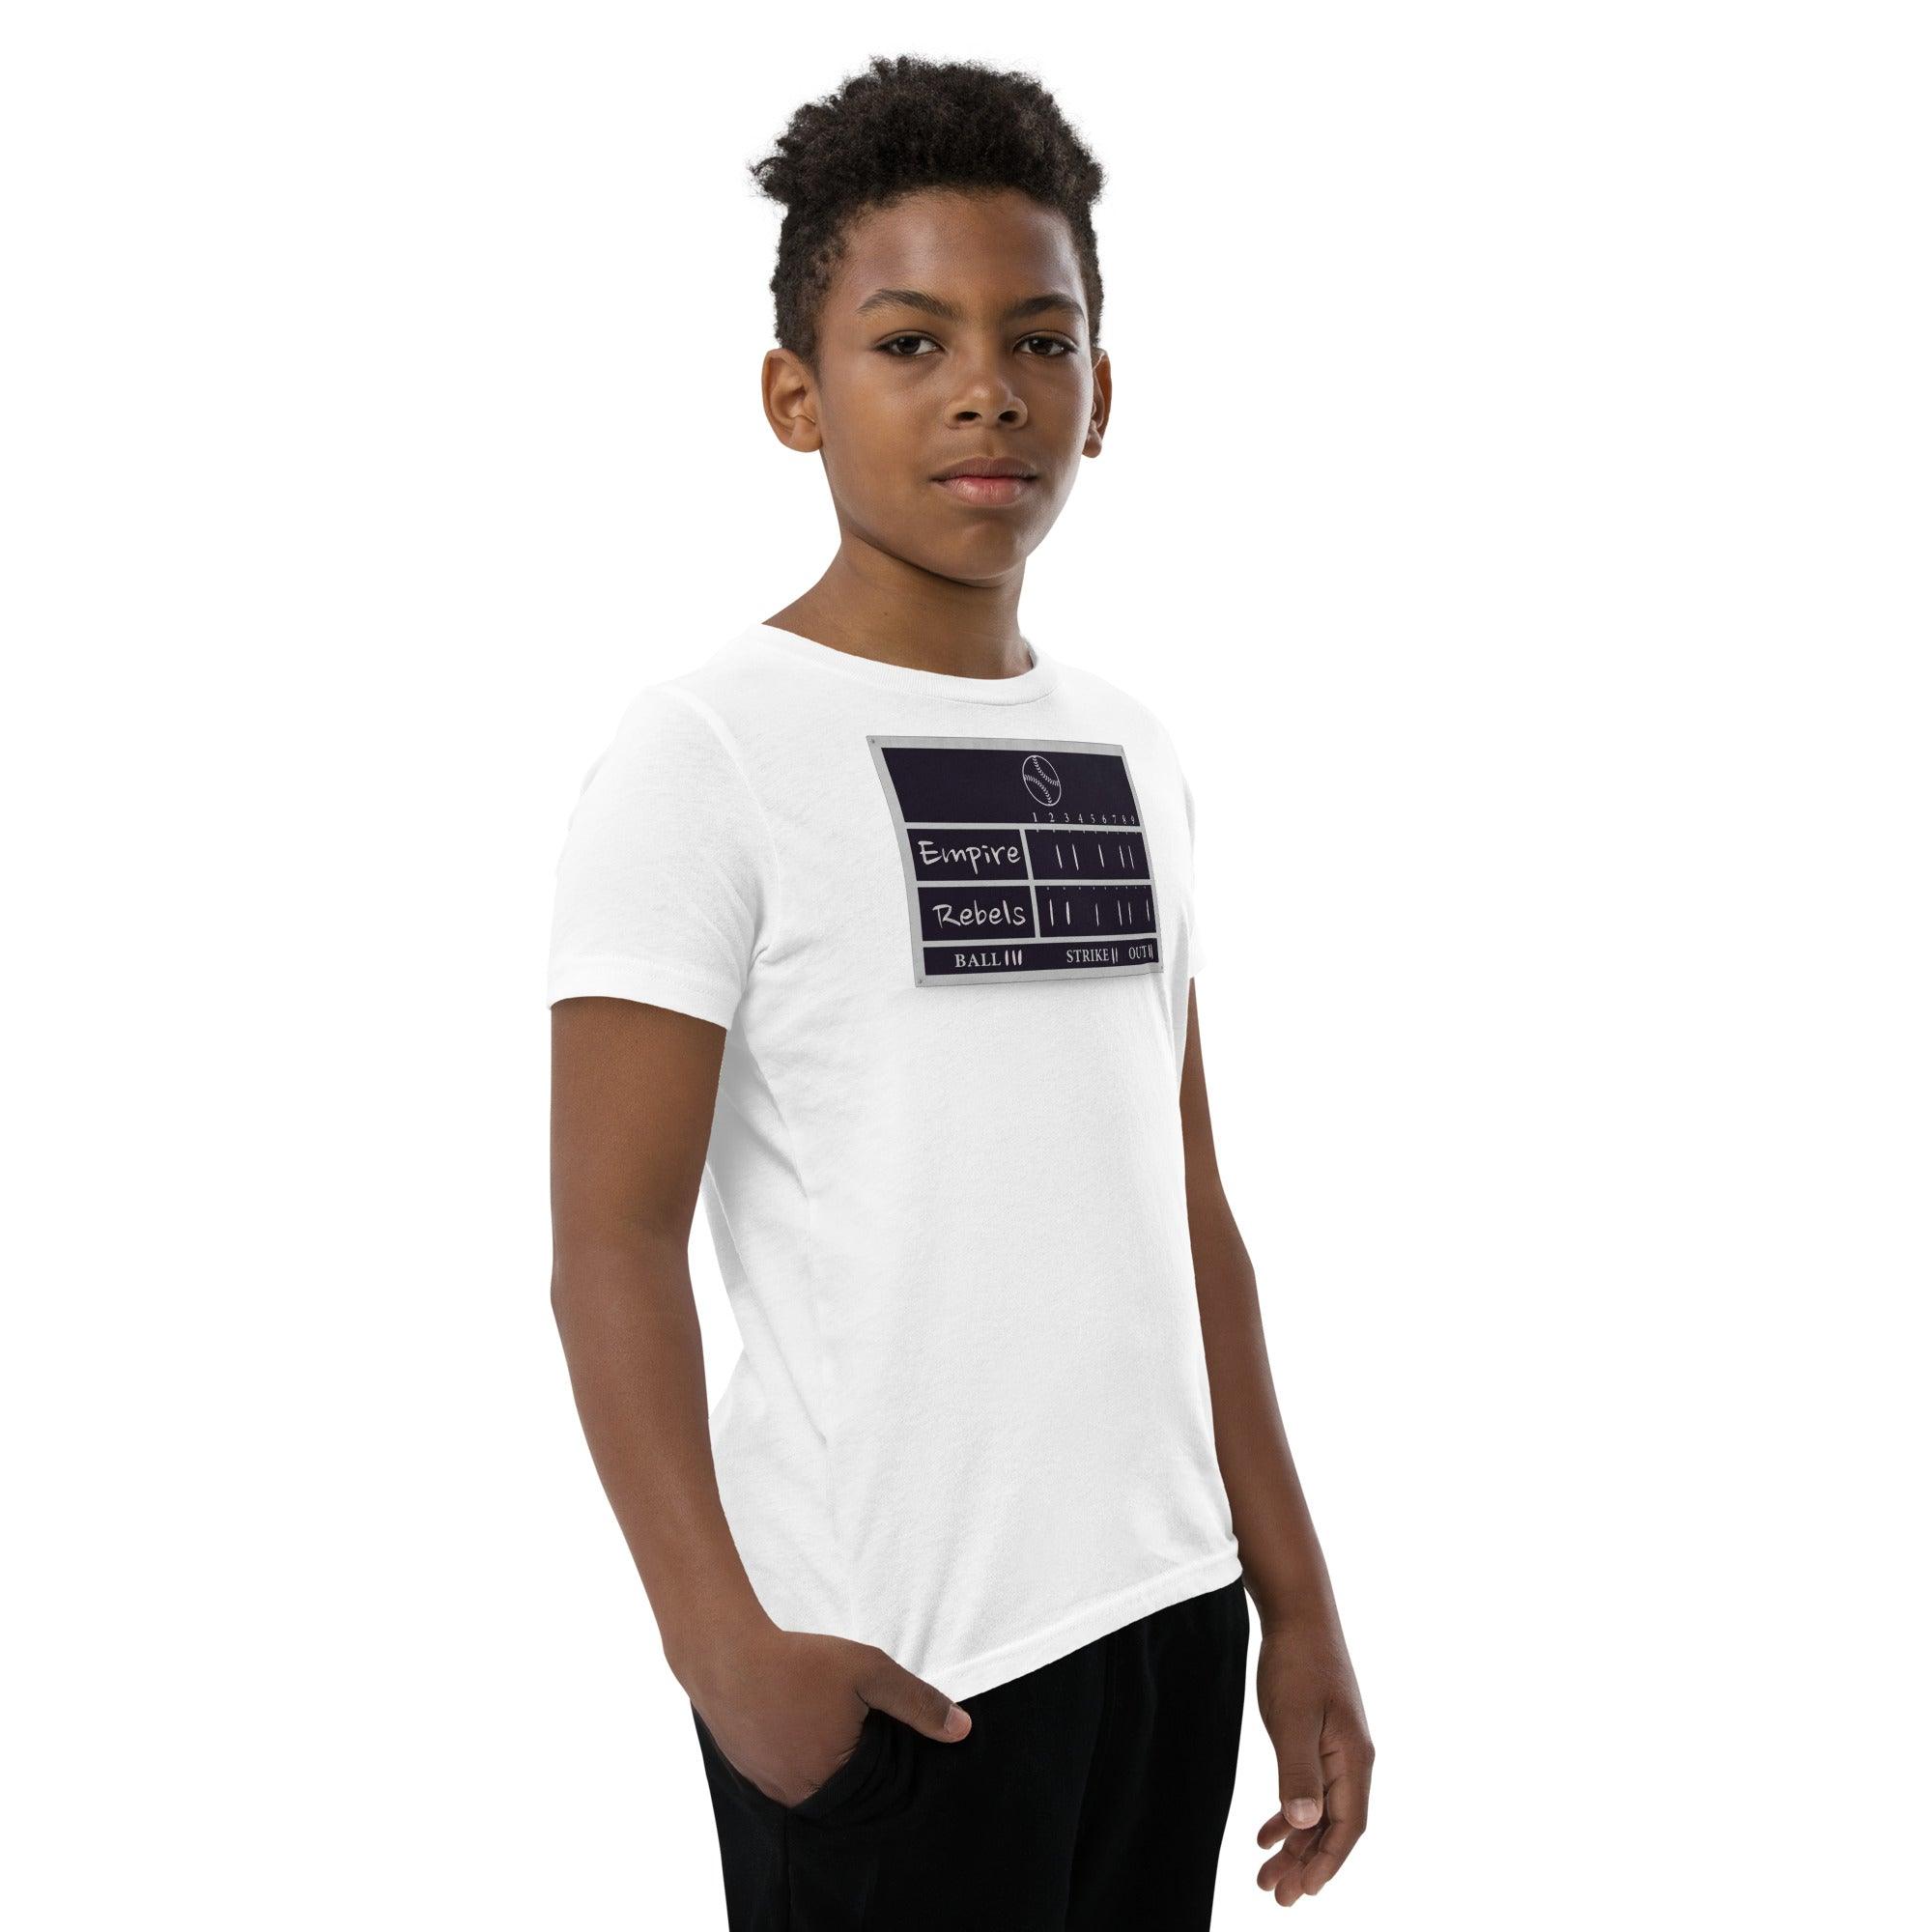 Empire vs Rebels Youth Short Sleeve T-Shirt